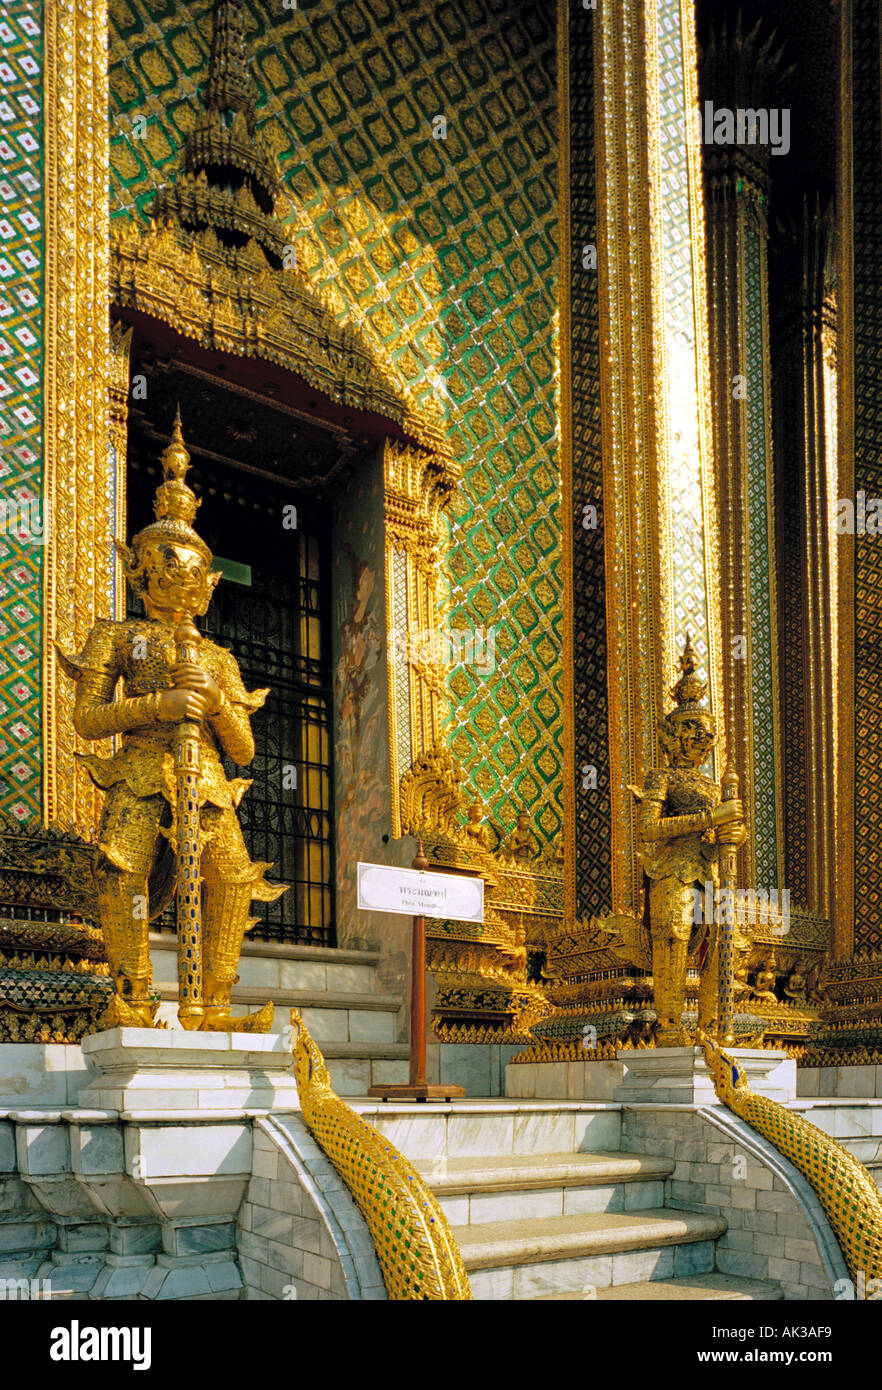 Royal Grand Palace Bangkok Thailand - Golden garudas guard the entrance to the royal pantheon holding statues of former kings of Thailand Stock Photo